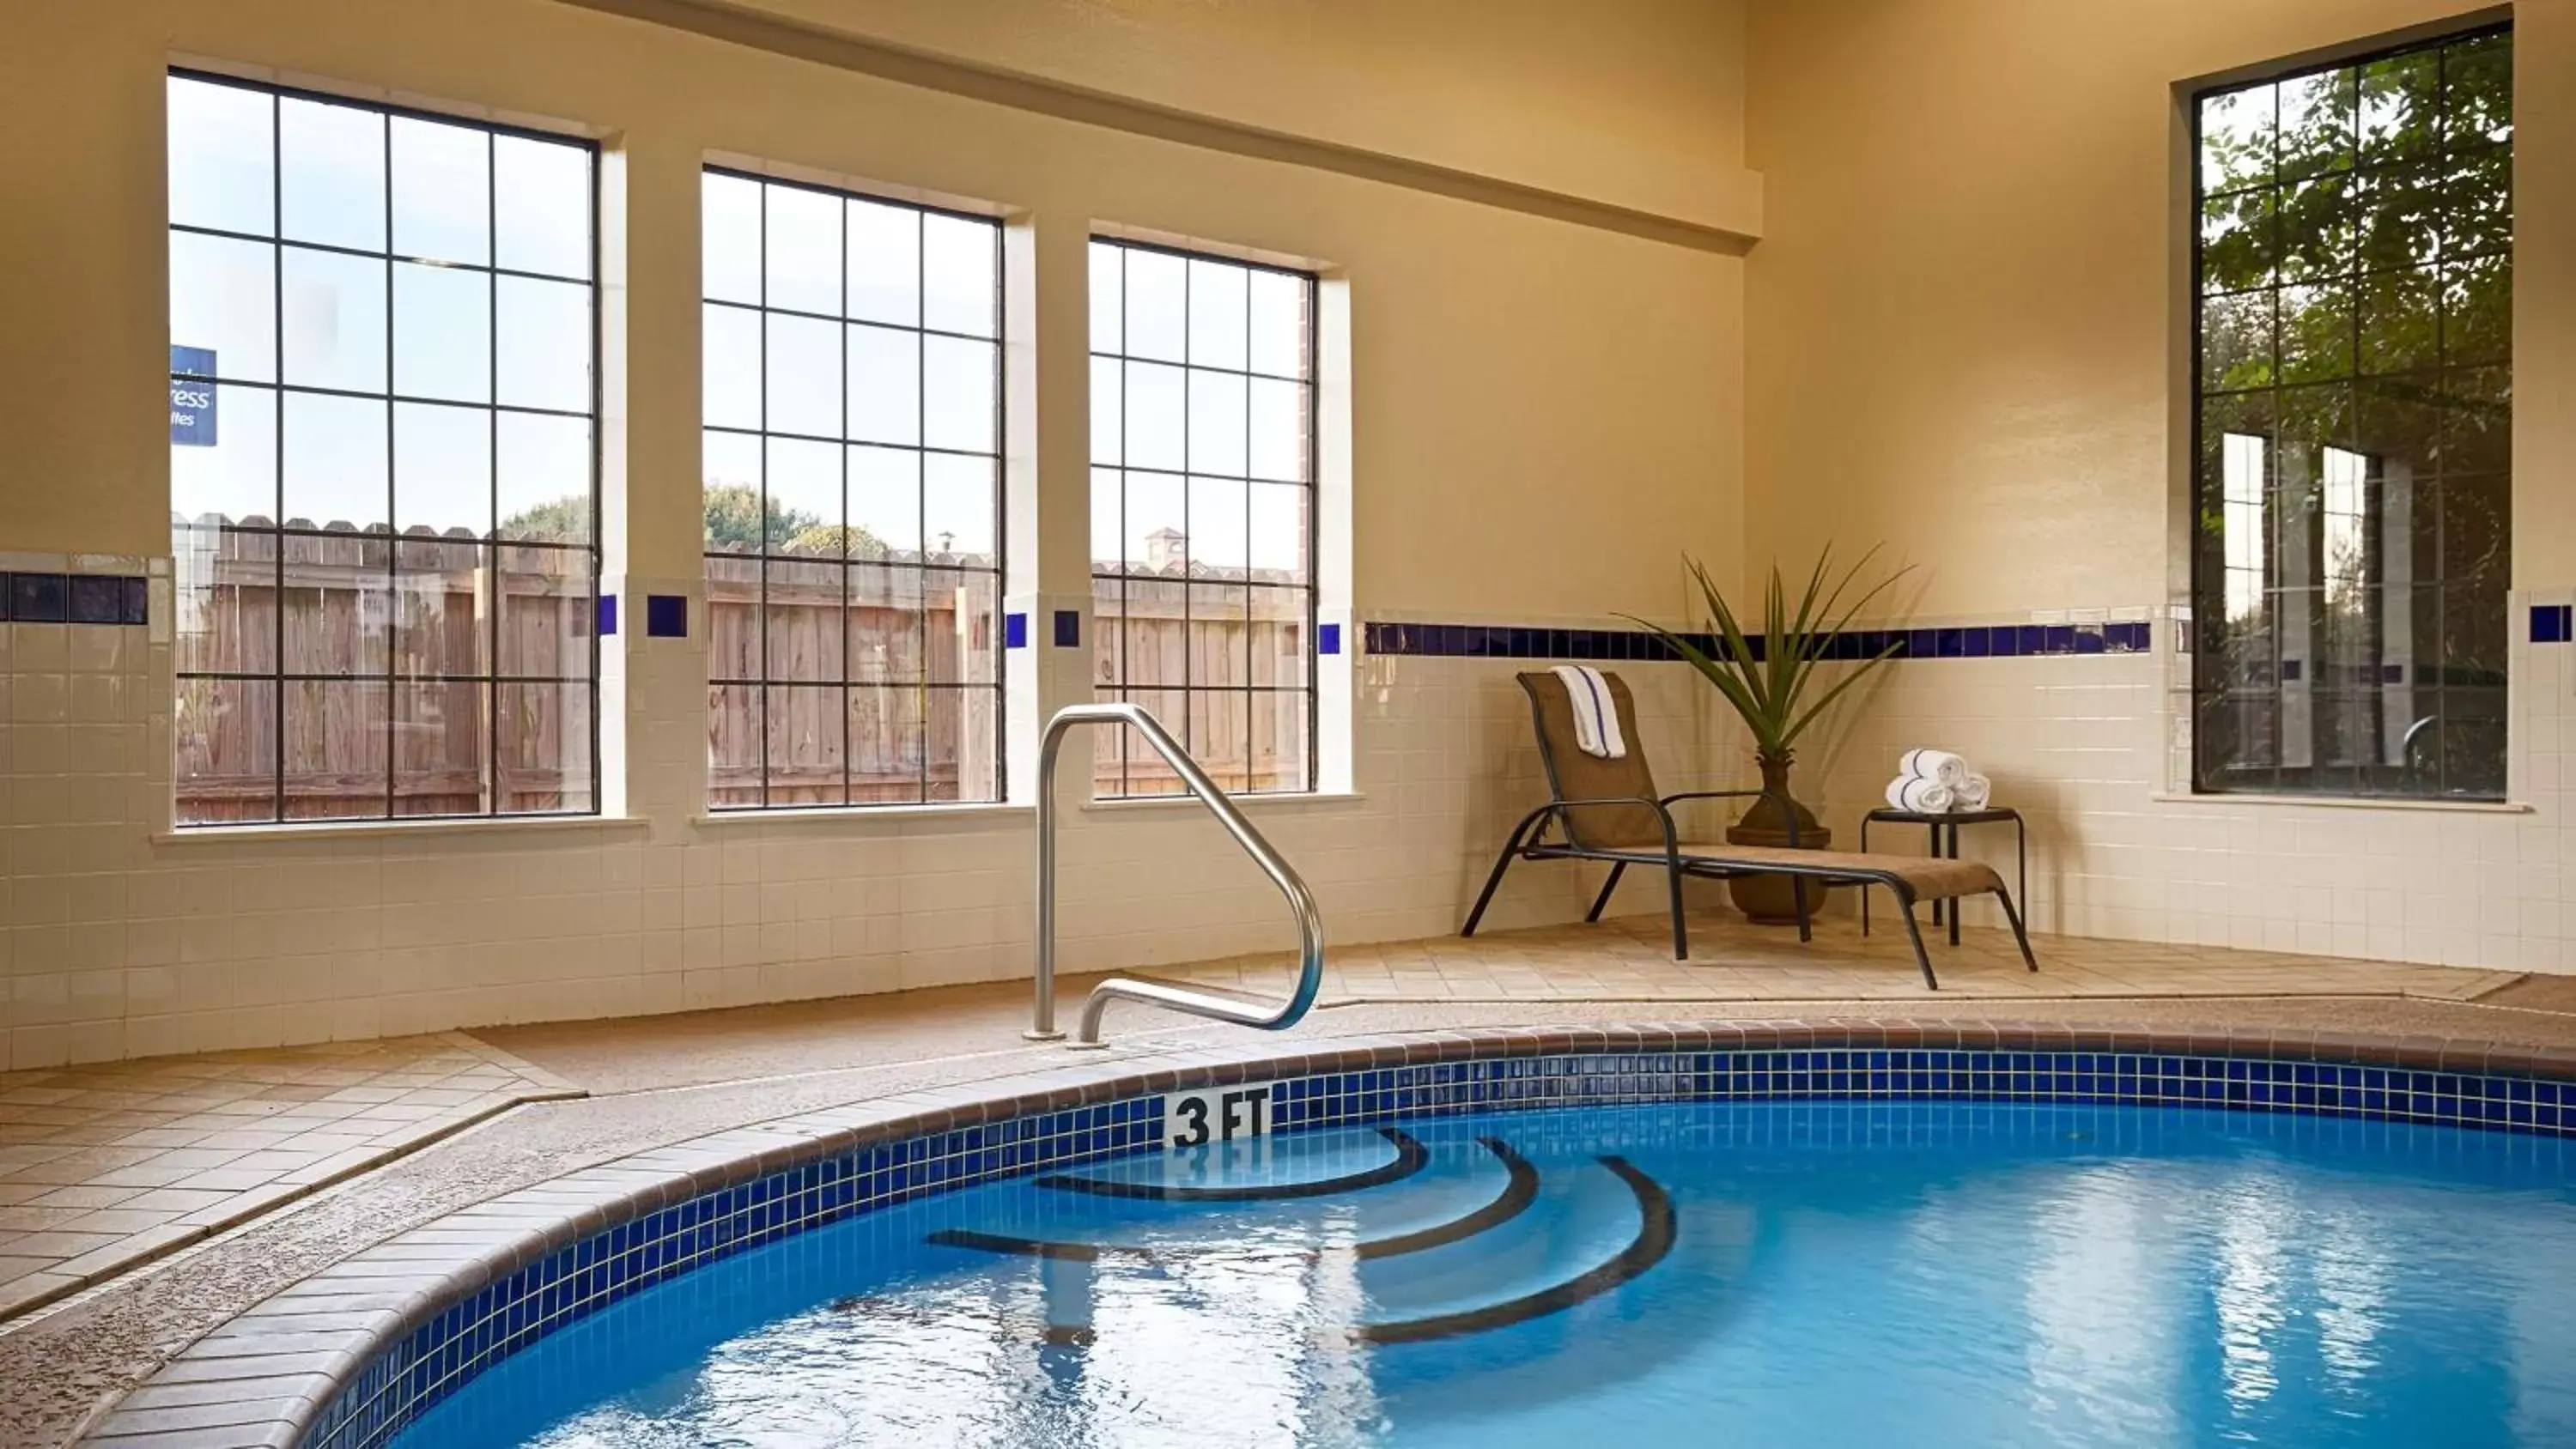 On site, Swimming Pool in Best Western Plus Lonoke Hotel